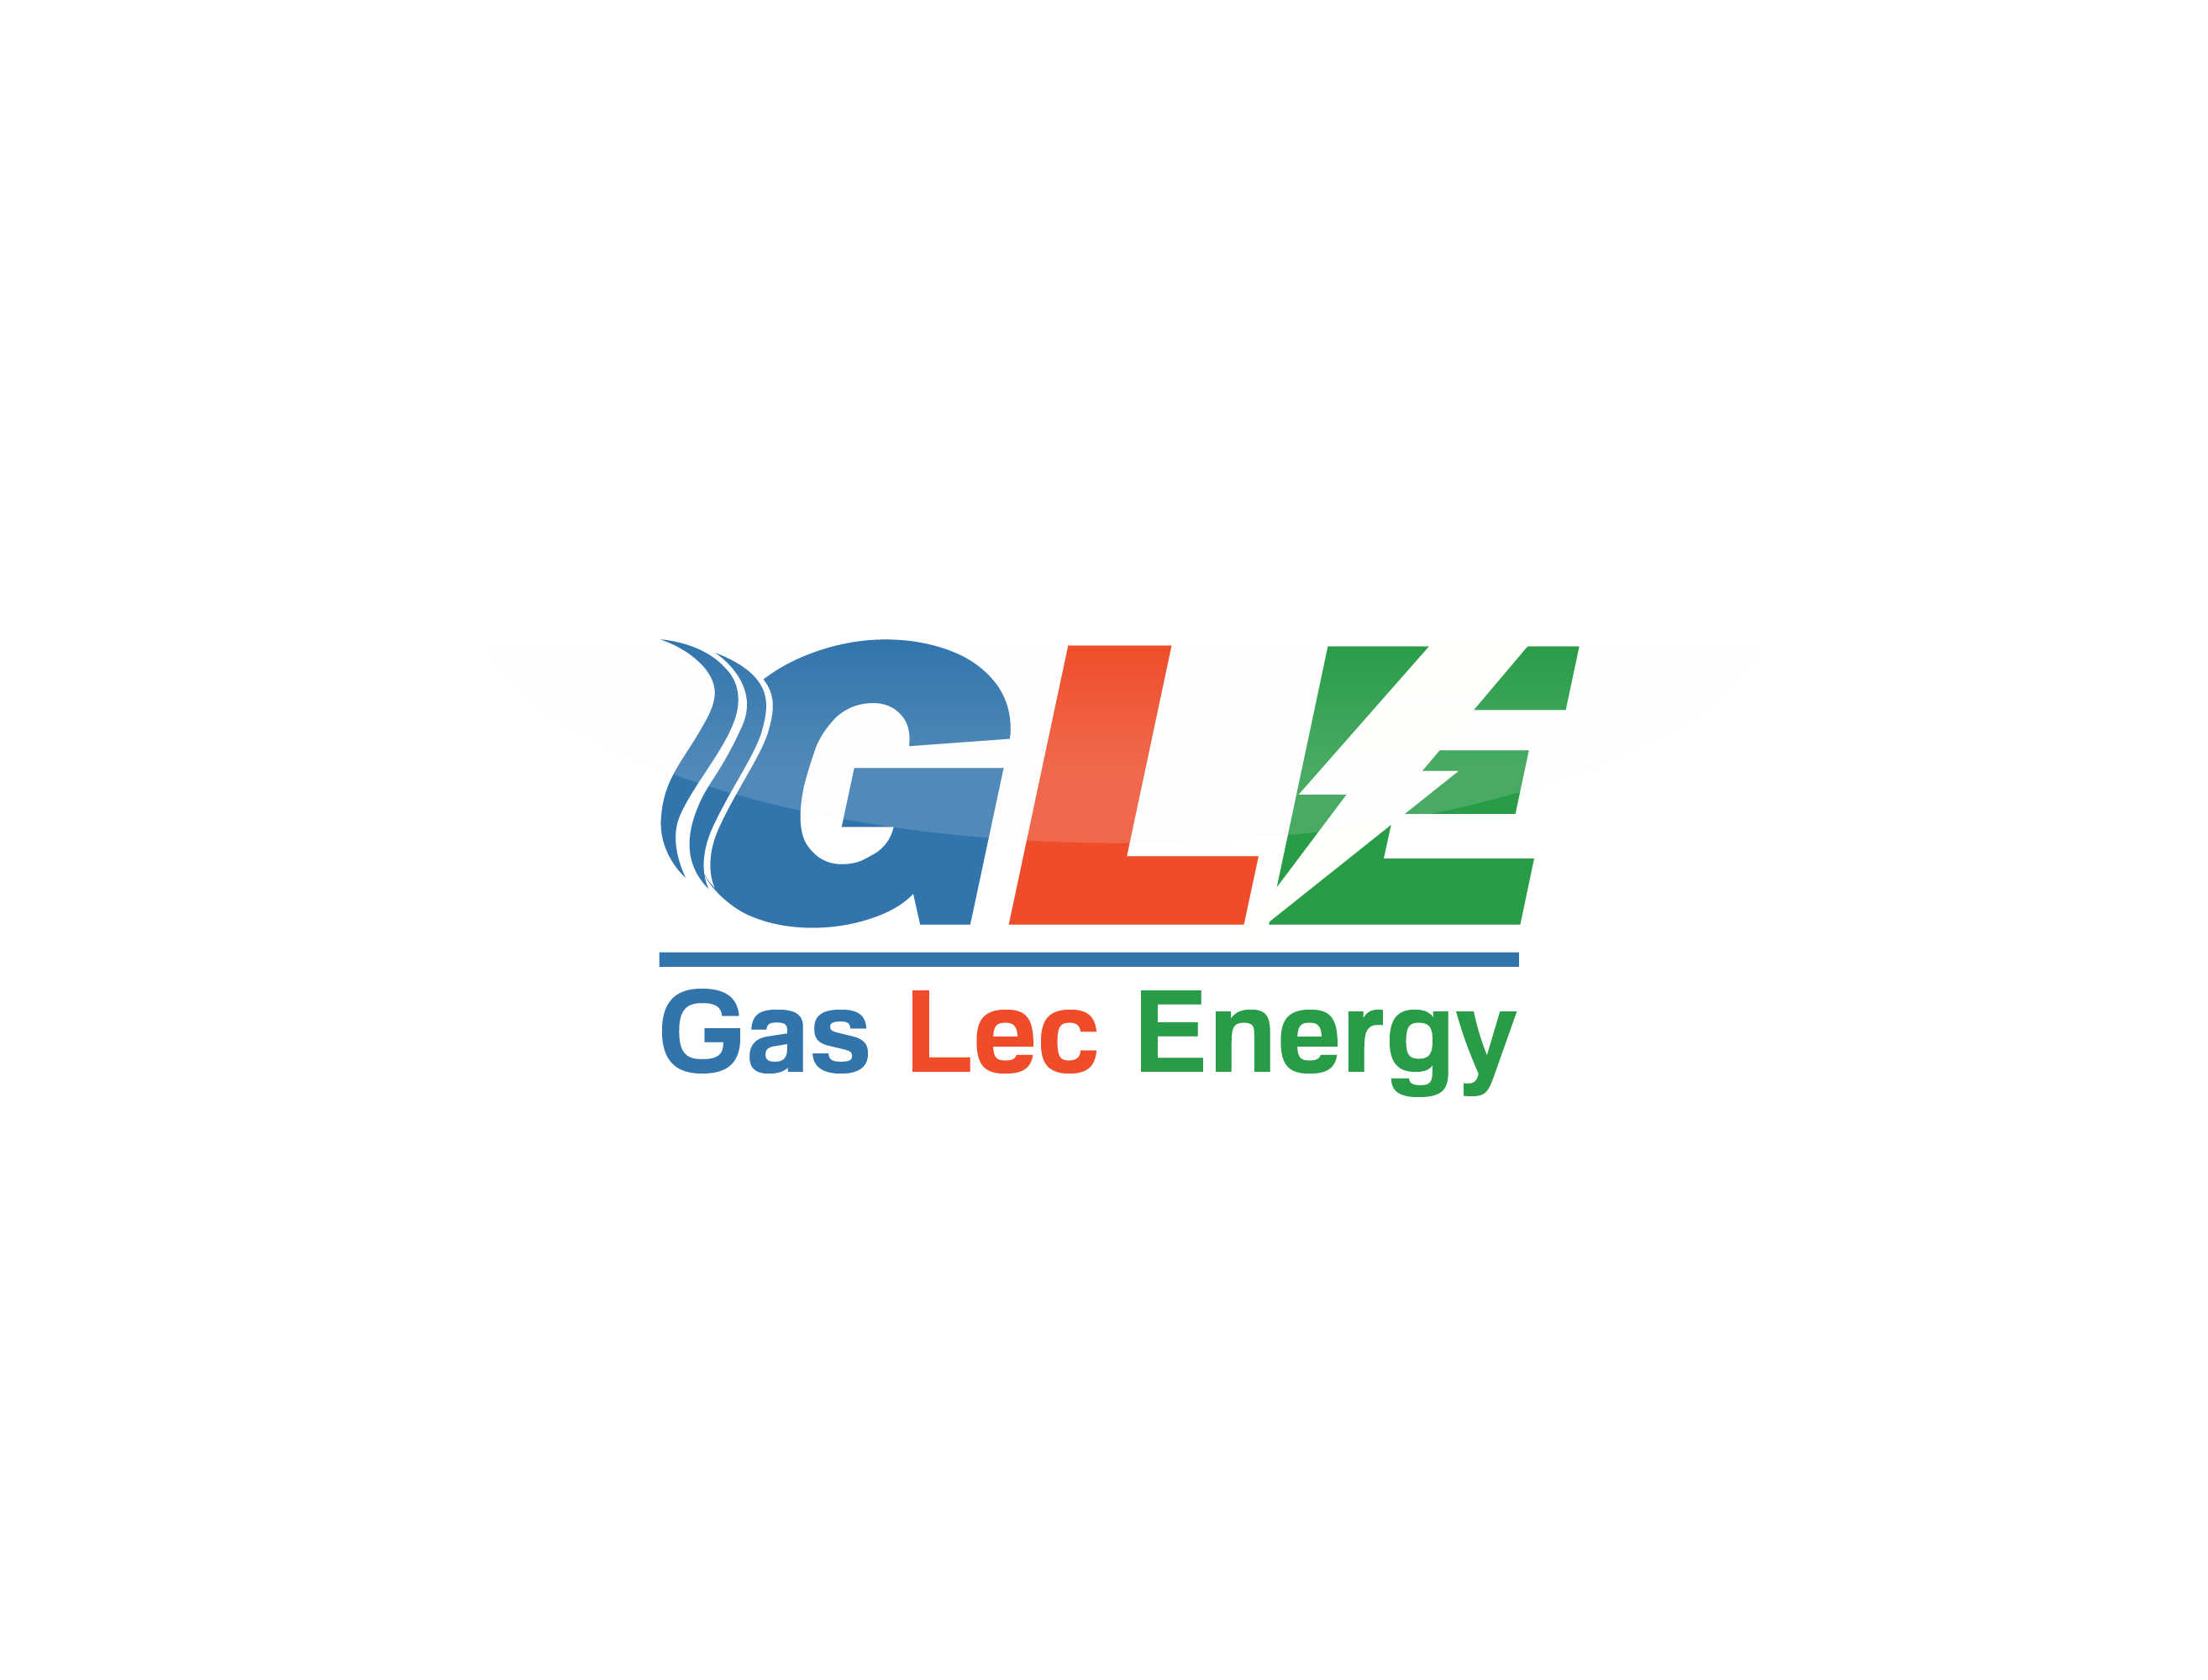 Gas Lec Energy Group